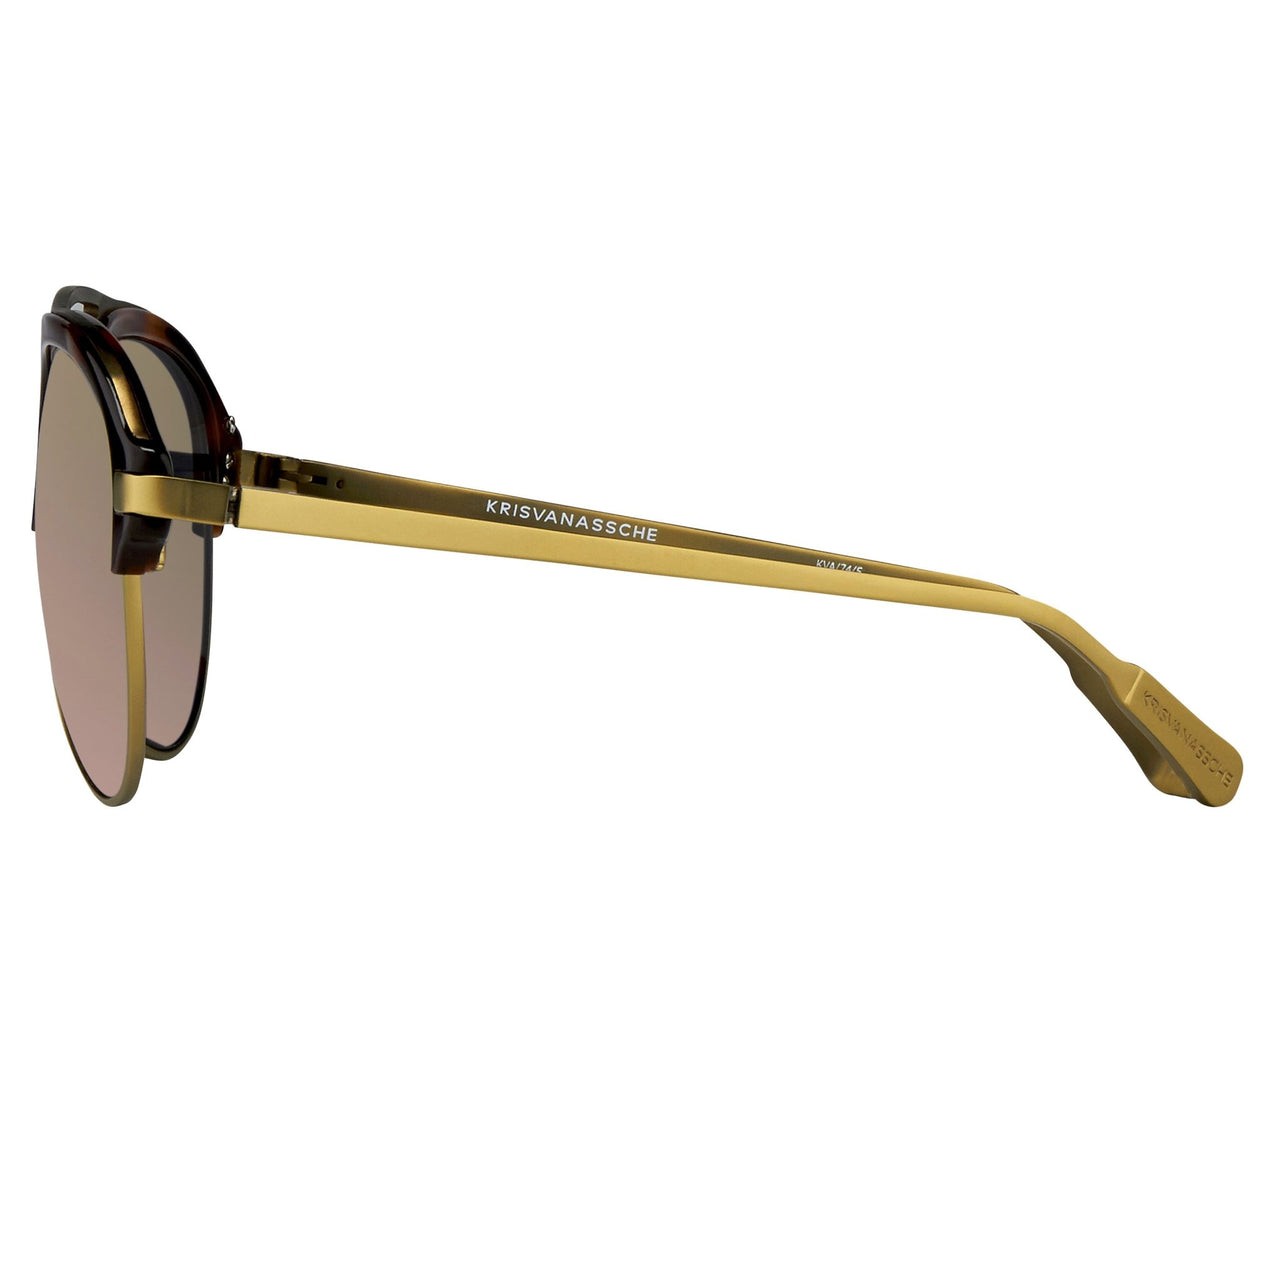 Kris Van Assche Sunglasses Classic Tortoiseshell Matte Bronze and Red Revo Lenses Category 3 - KVA74C5SUN - Watches & Crystals